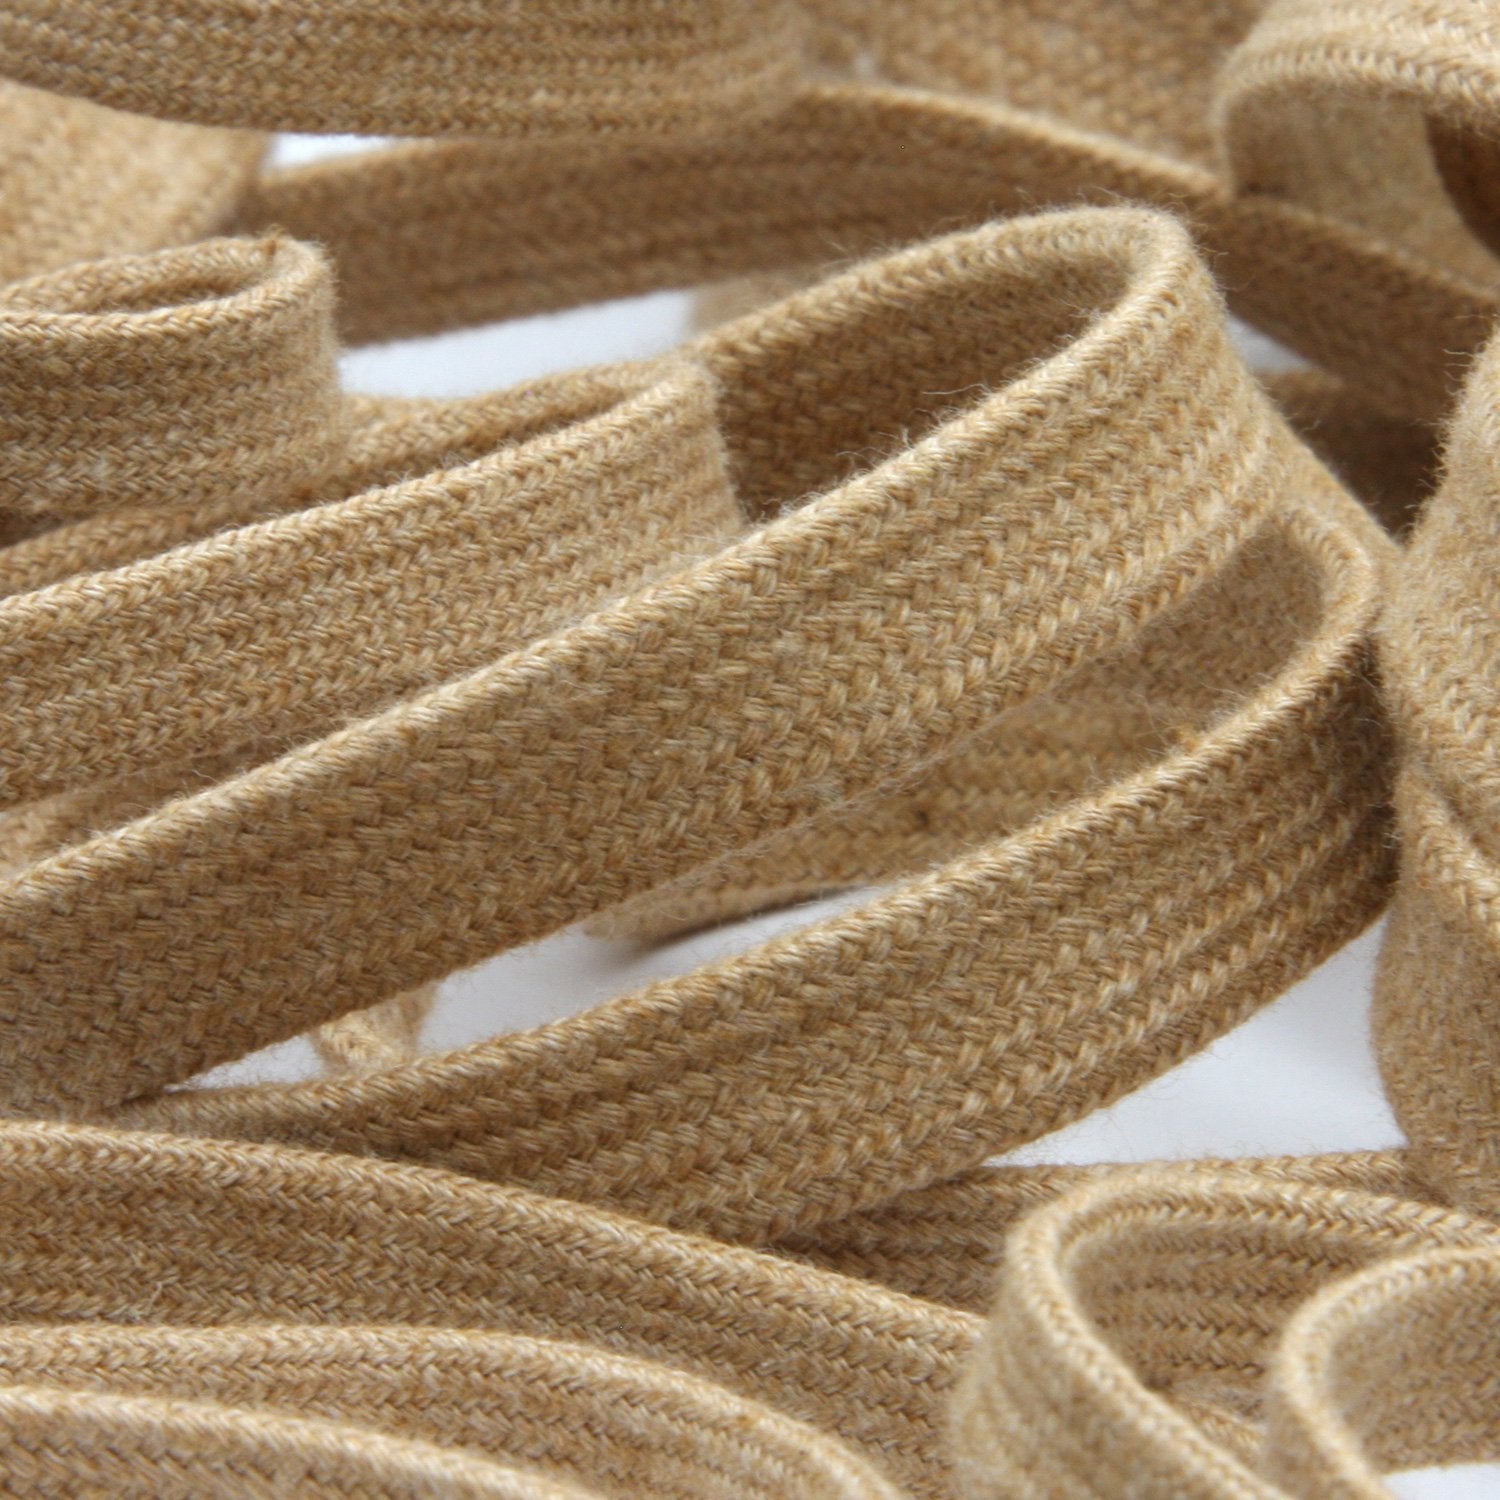 Organic Cotton Elastic Cord approx.3mm (1/8) 9.14 Meters Roll - FUJIYAMA  RIBBON